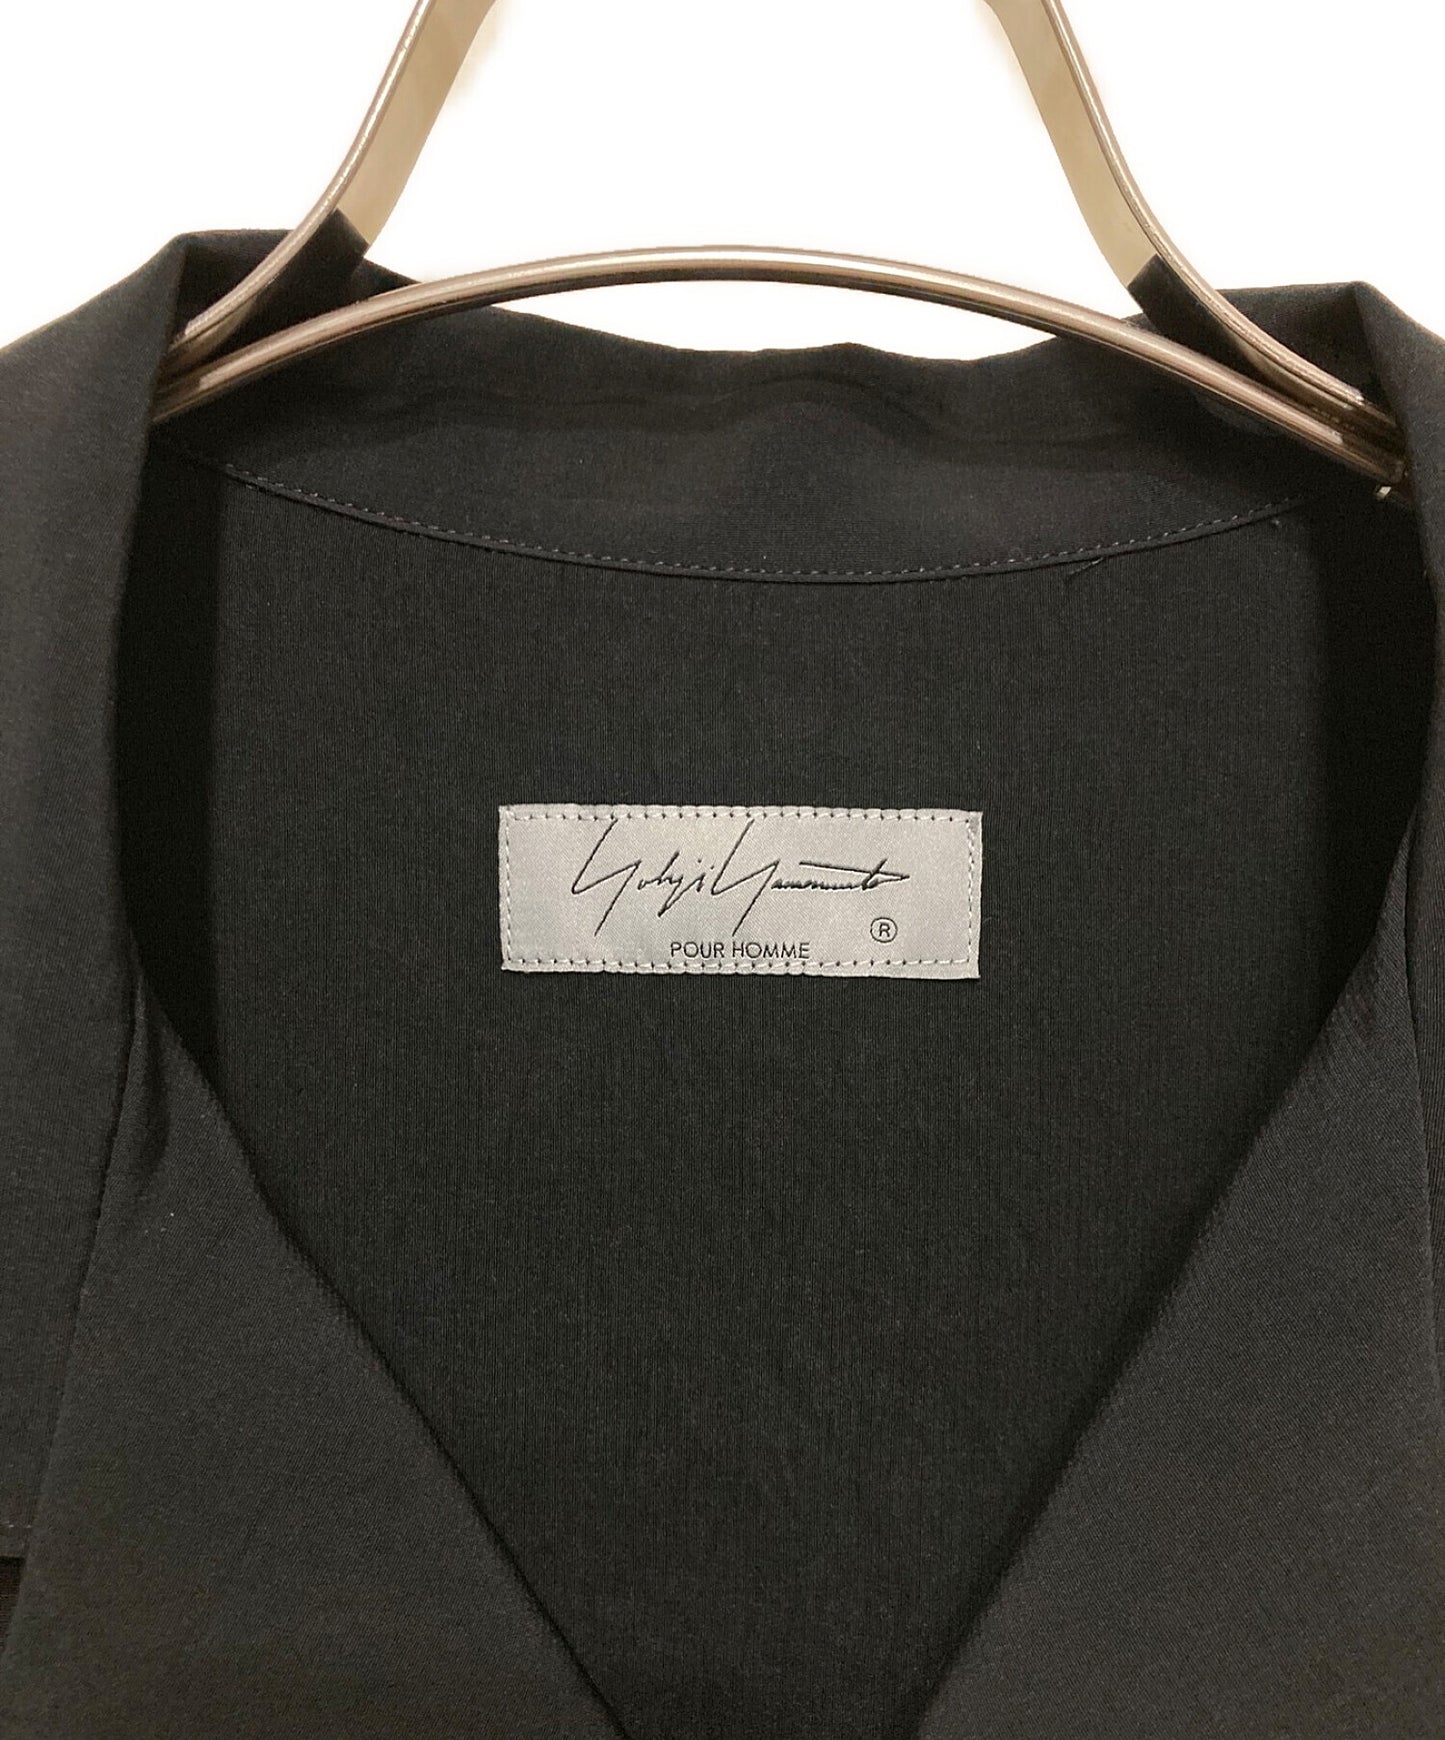 Yohji Yamamoto Pour Homme开放项圈长衬衫HG-B47-502